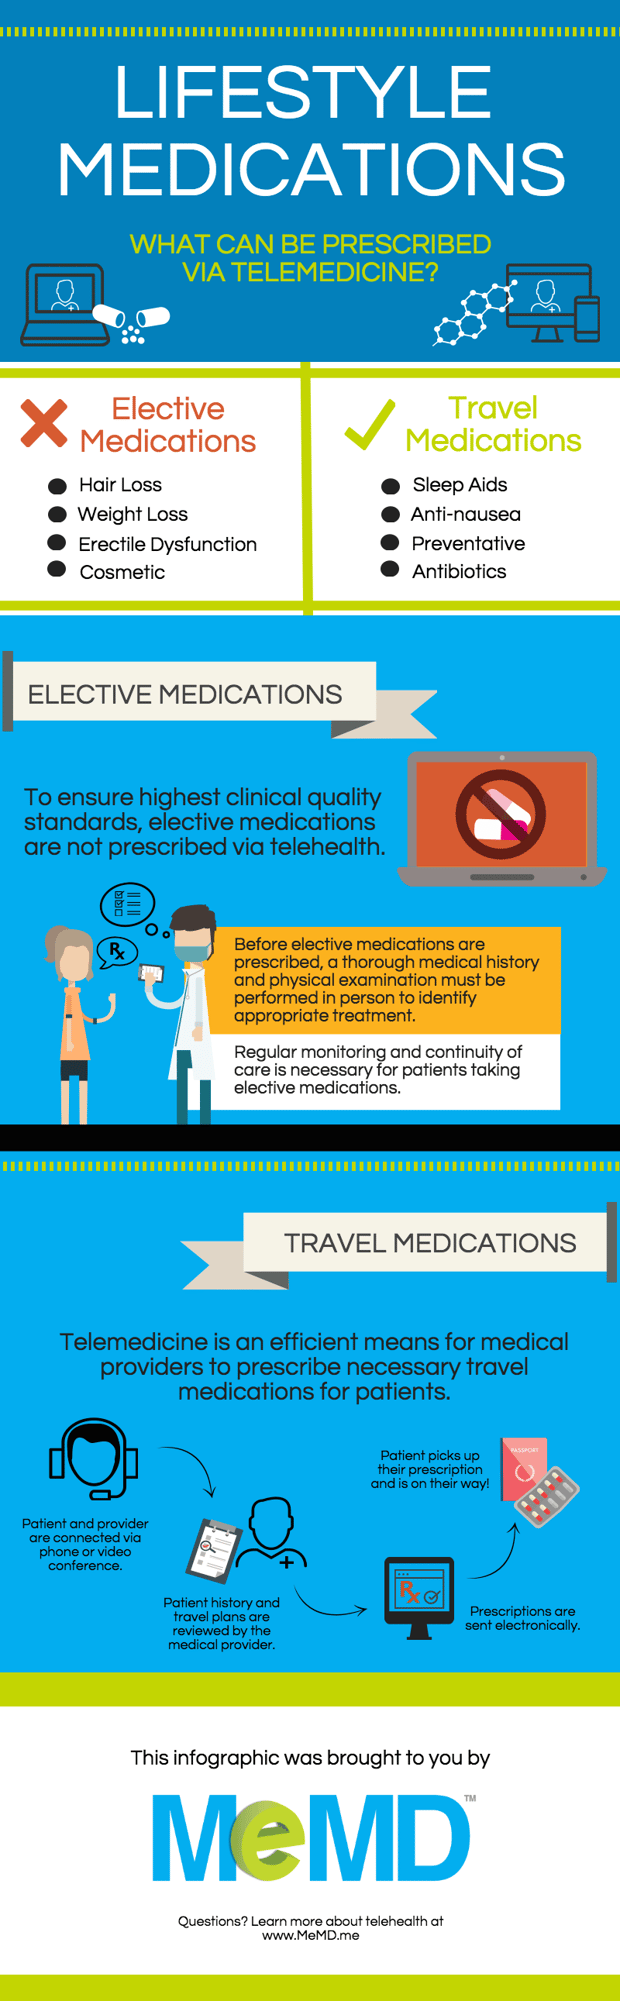 blog-infographic-telemedicine-medications-lifestyle